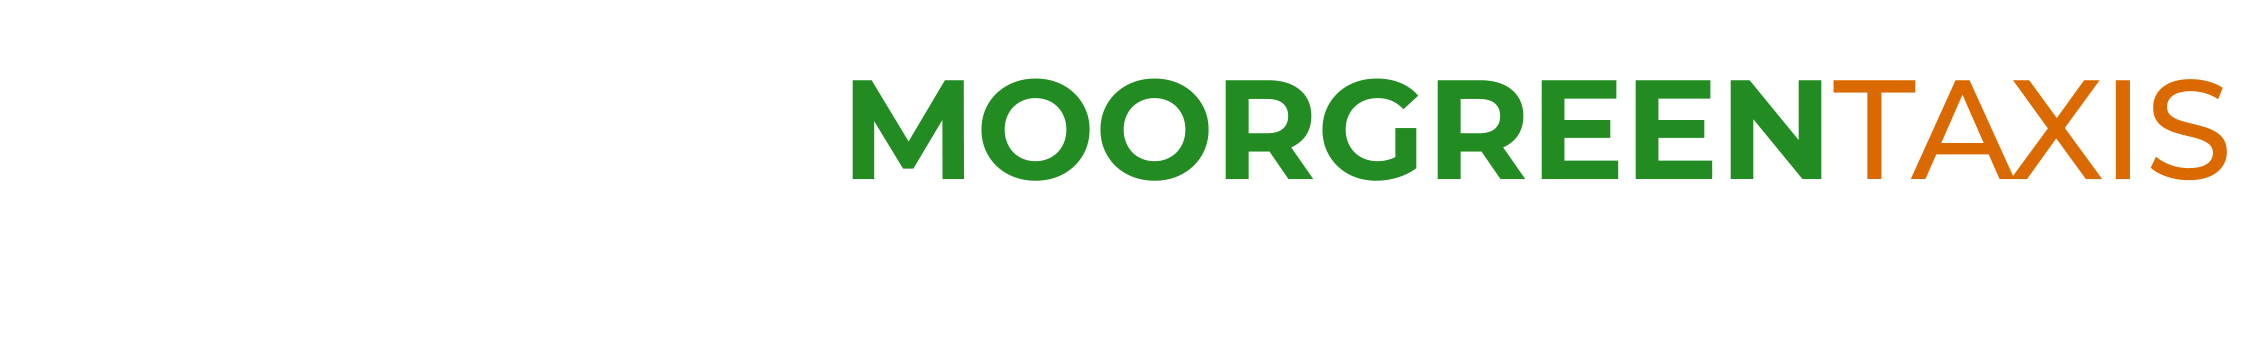 moorgreentaxis logo